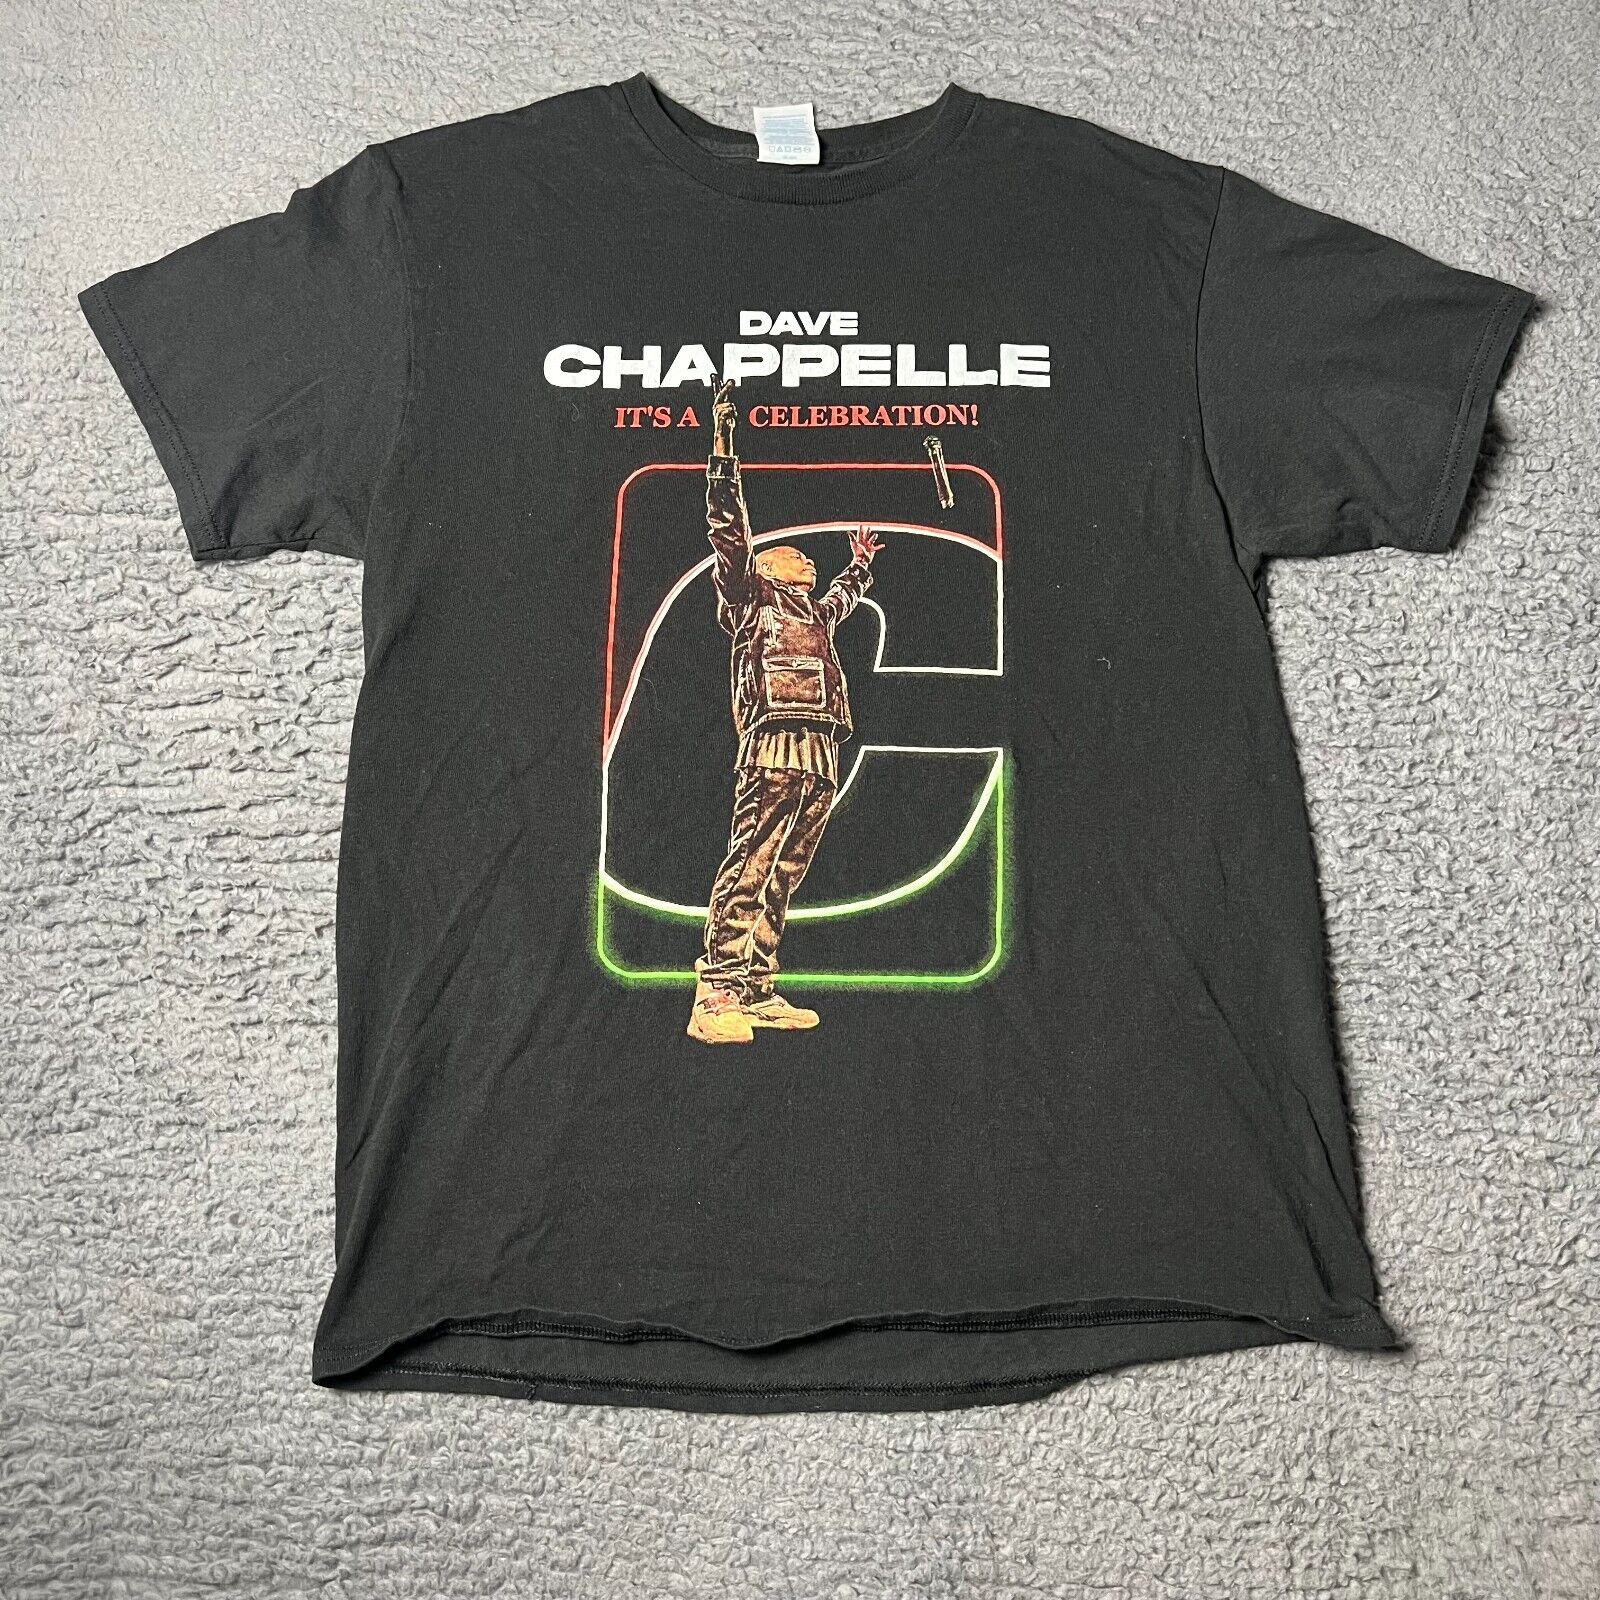 Dave Chappelle Its A Celebration Tour T Shirt Mens Medium Black Short Sleeve